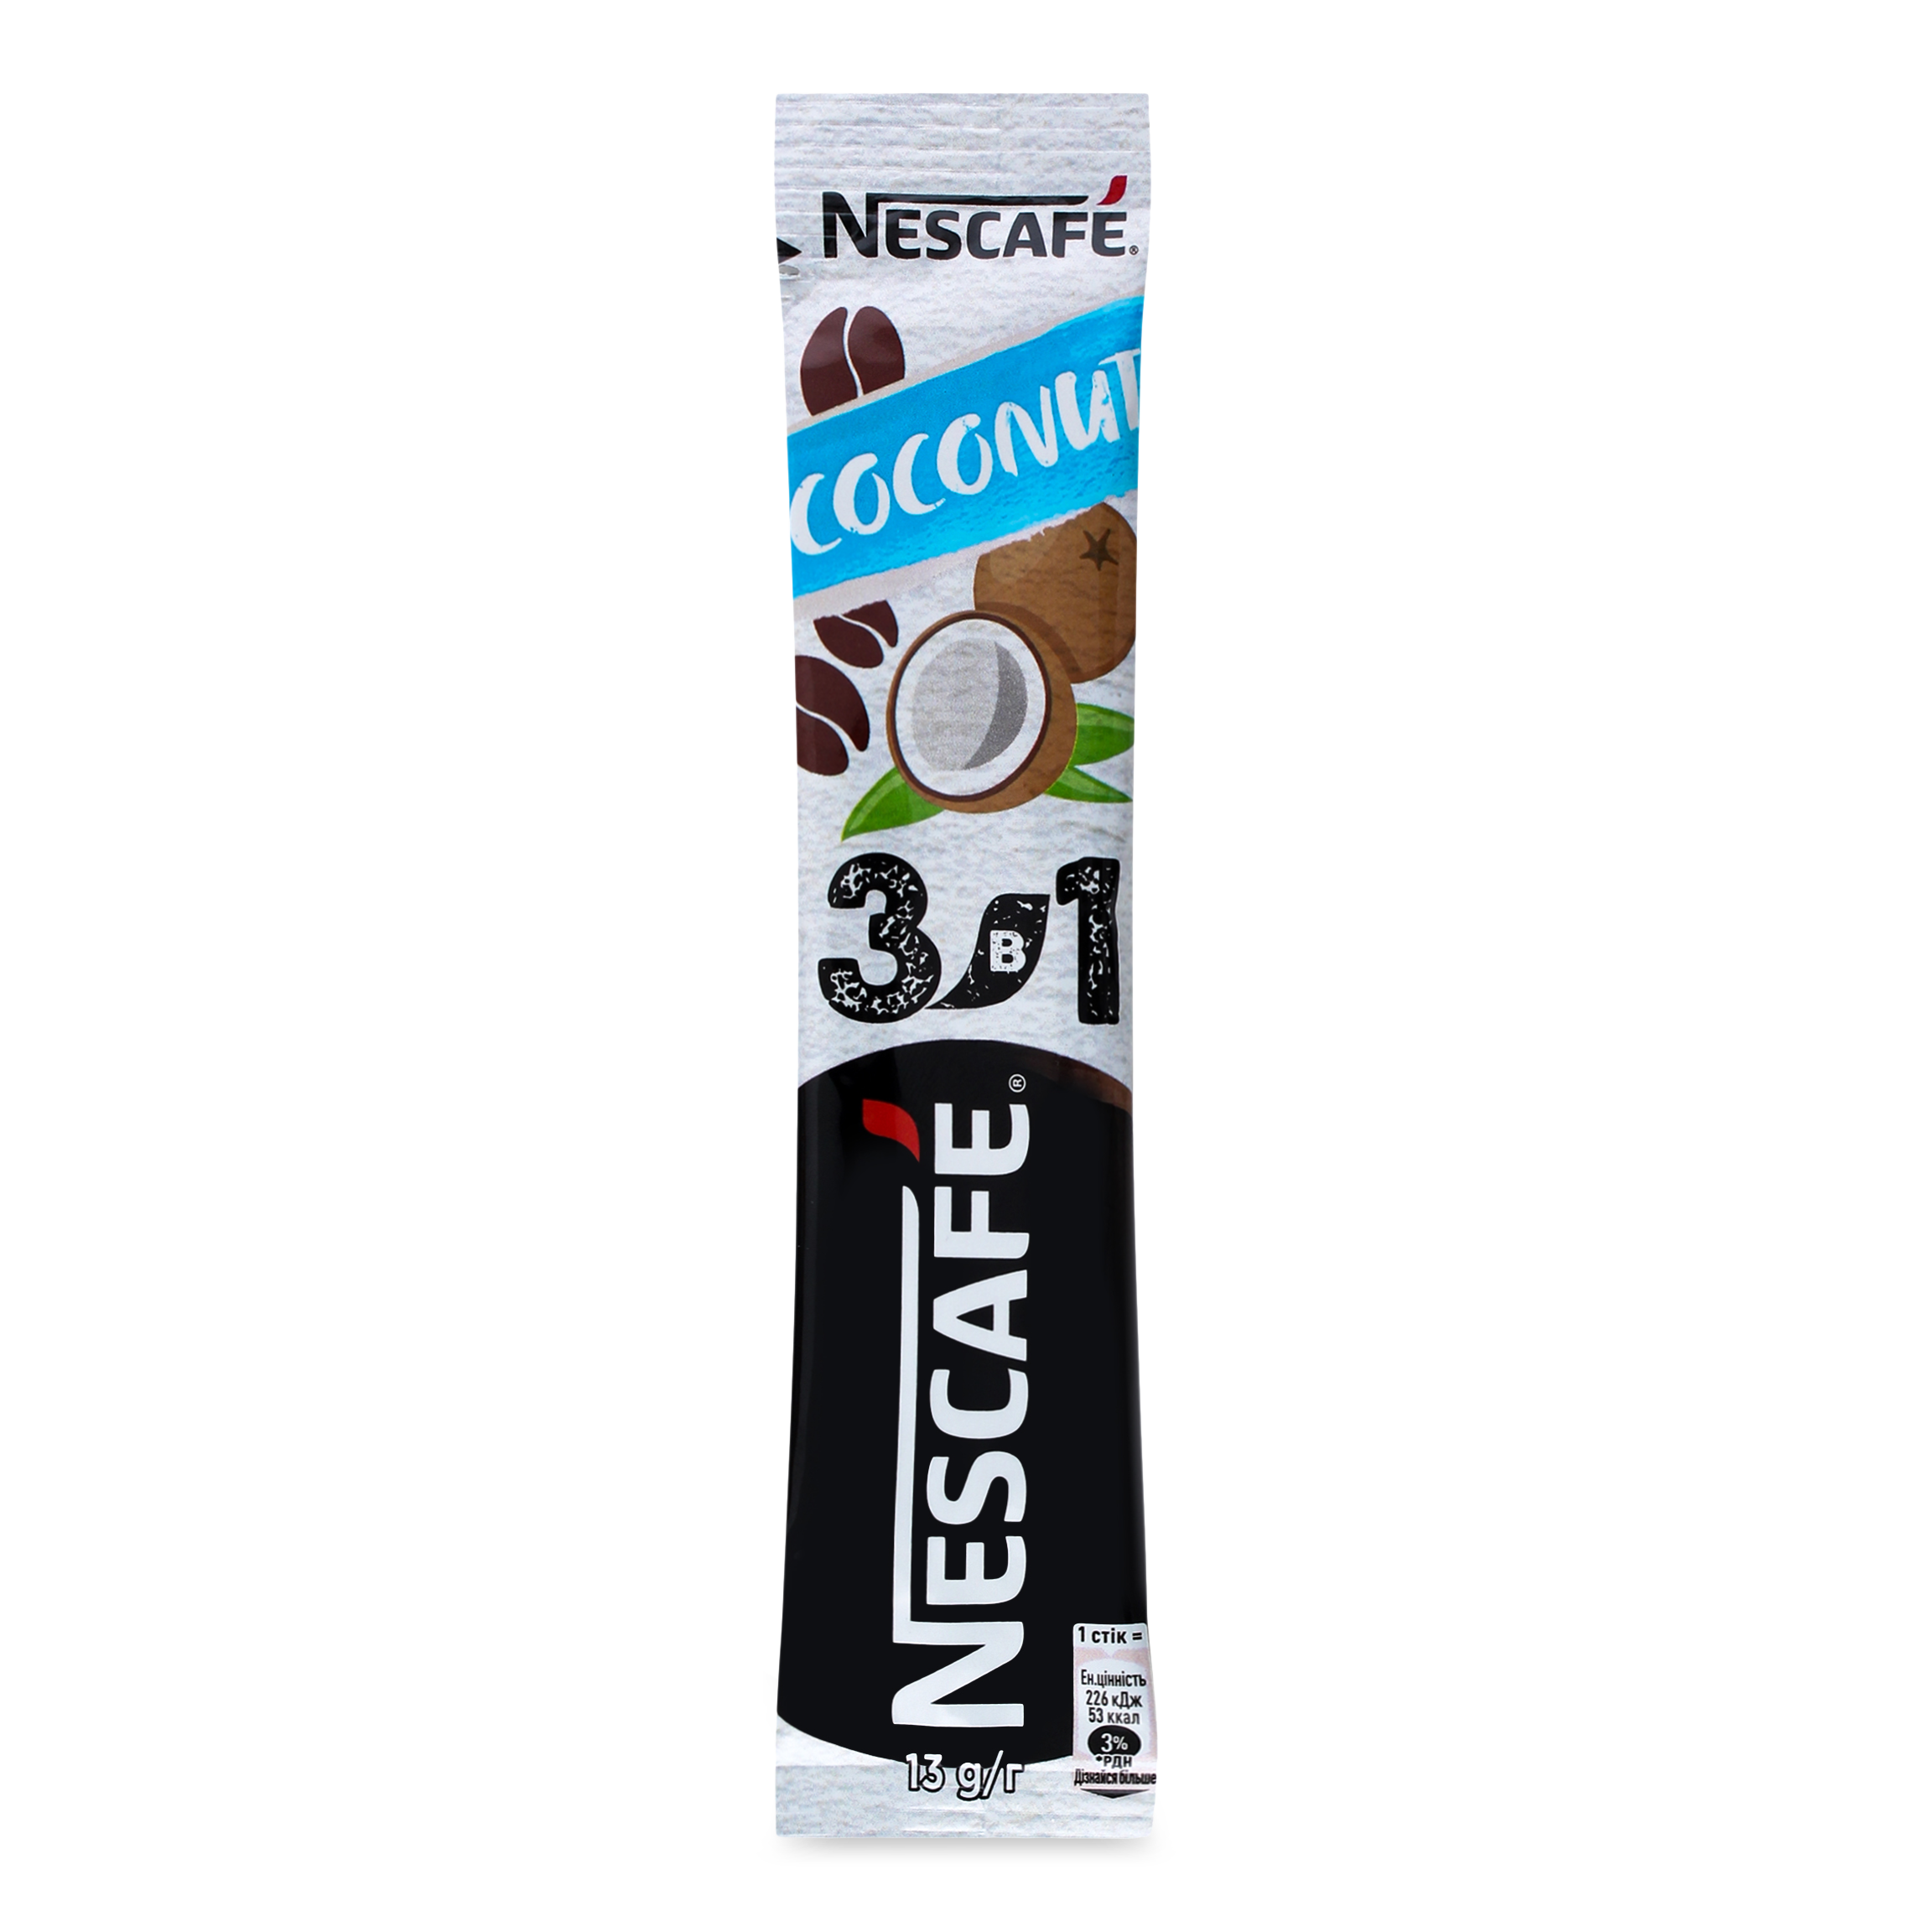 ESCAFÉ 3in1 Coconut instant coffee drink stick 13g